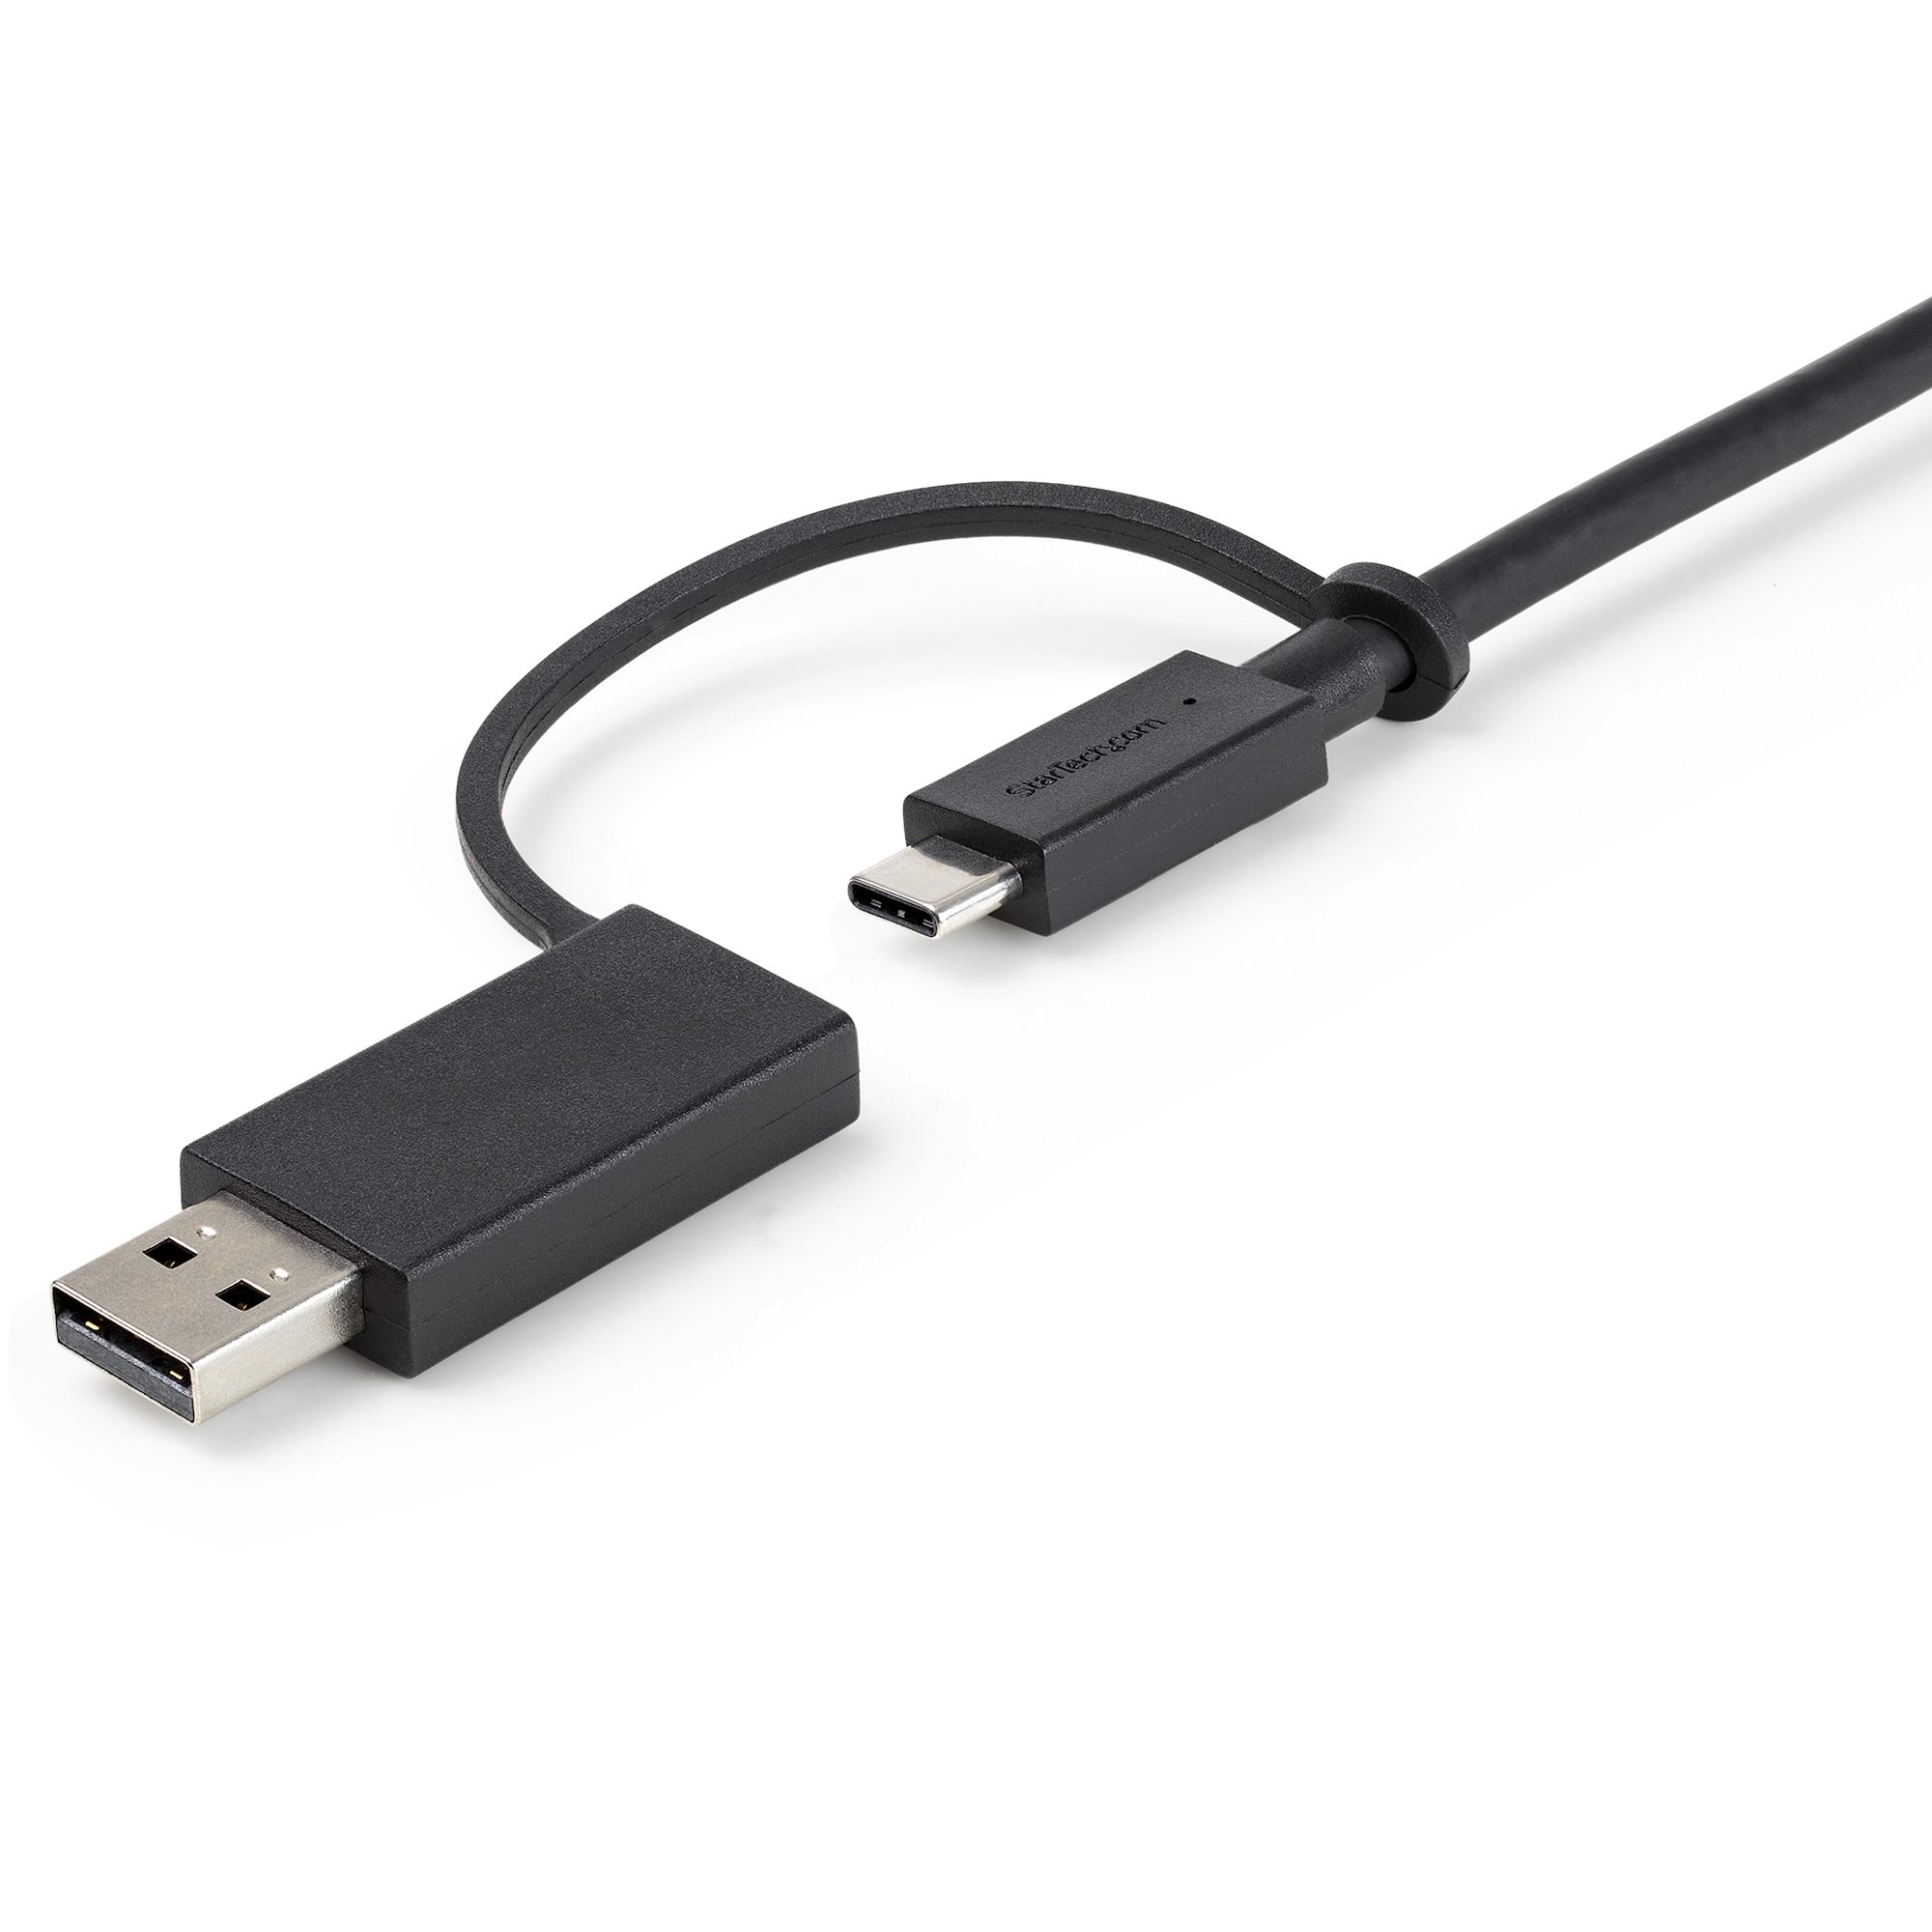 underkjole Mordrin tak skal du have 3ft Hybrid USB-C Cable w/ USB-A Adapter - USB-C Cables | StarTech.com